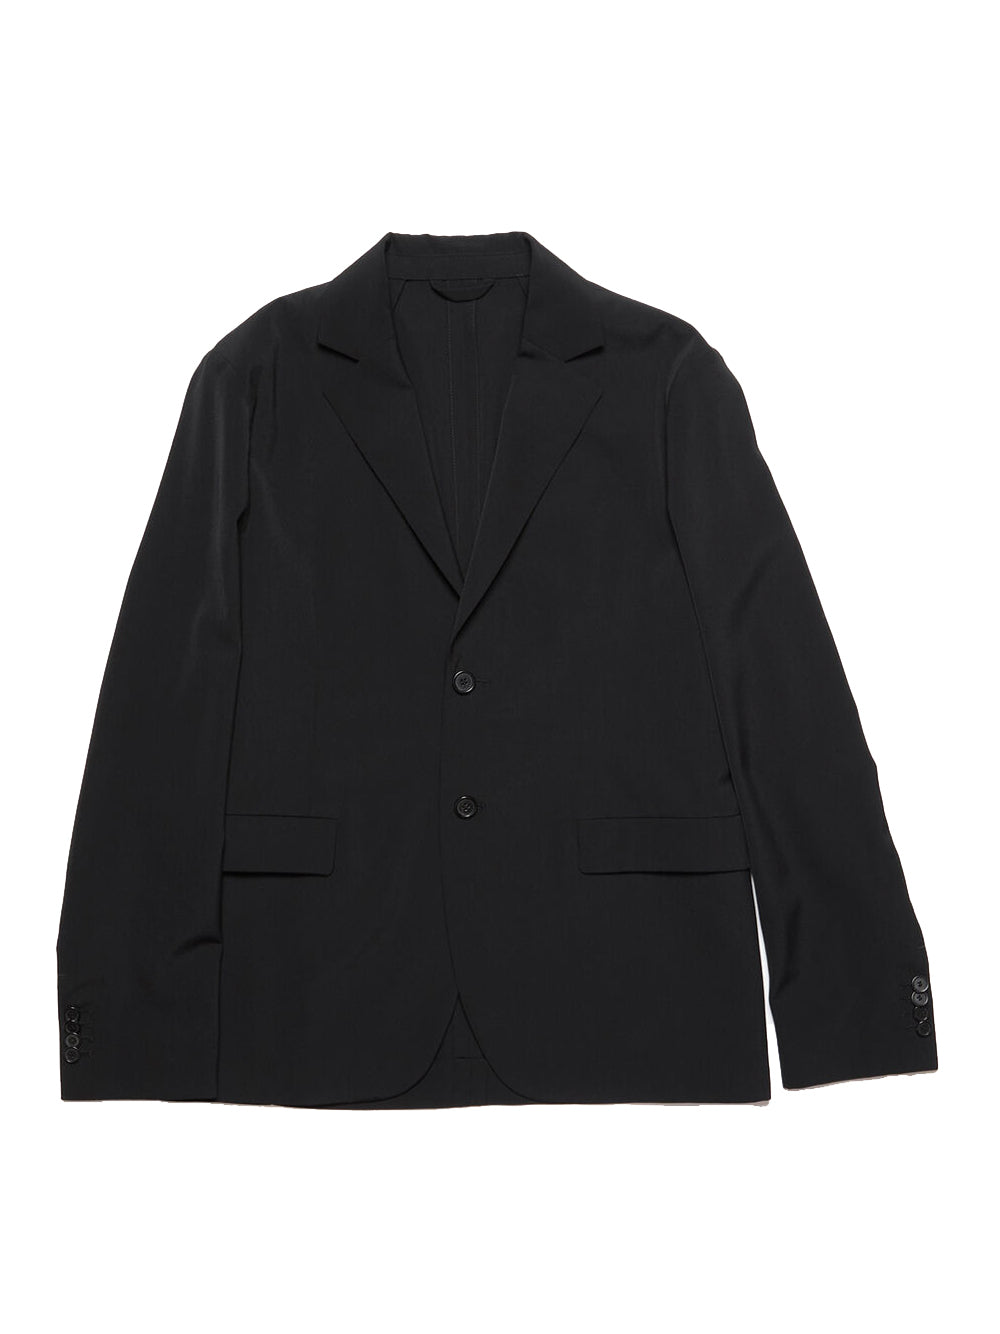 Regular Suit Jacket (Black)